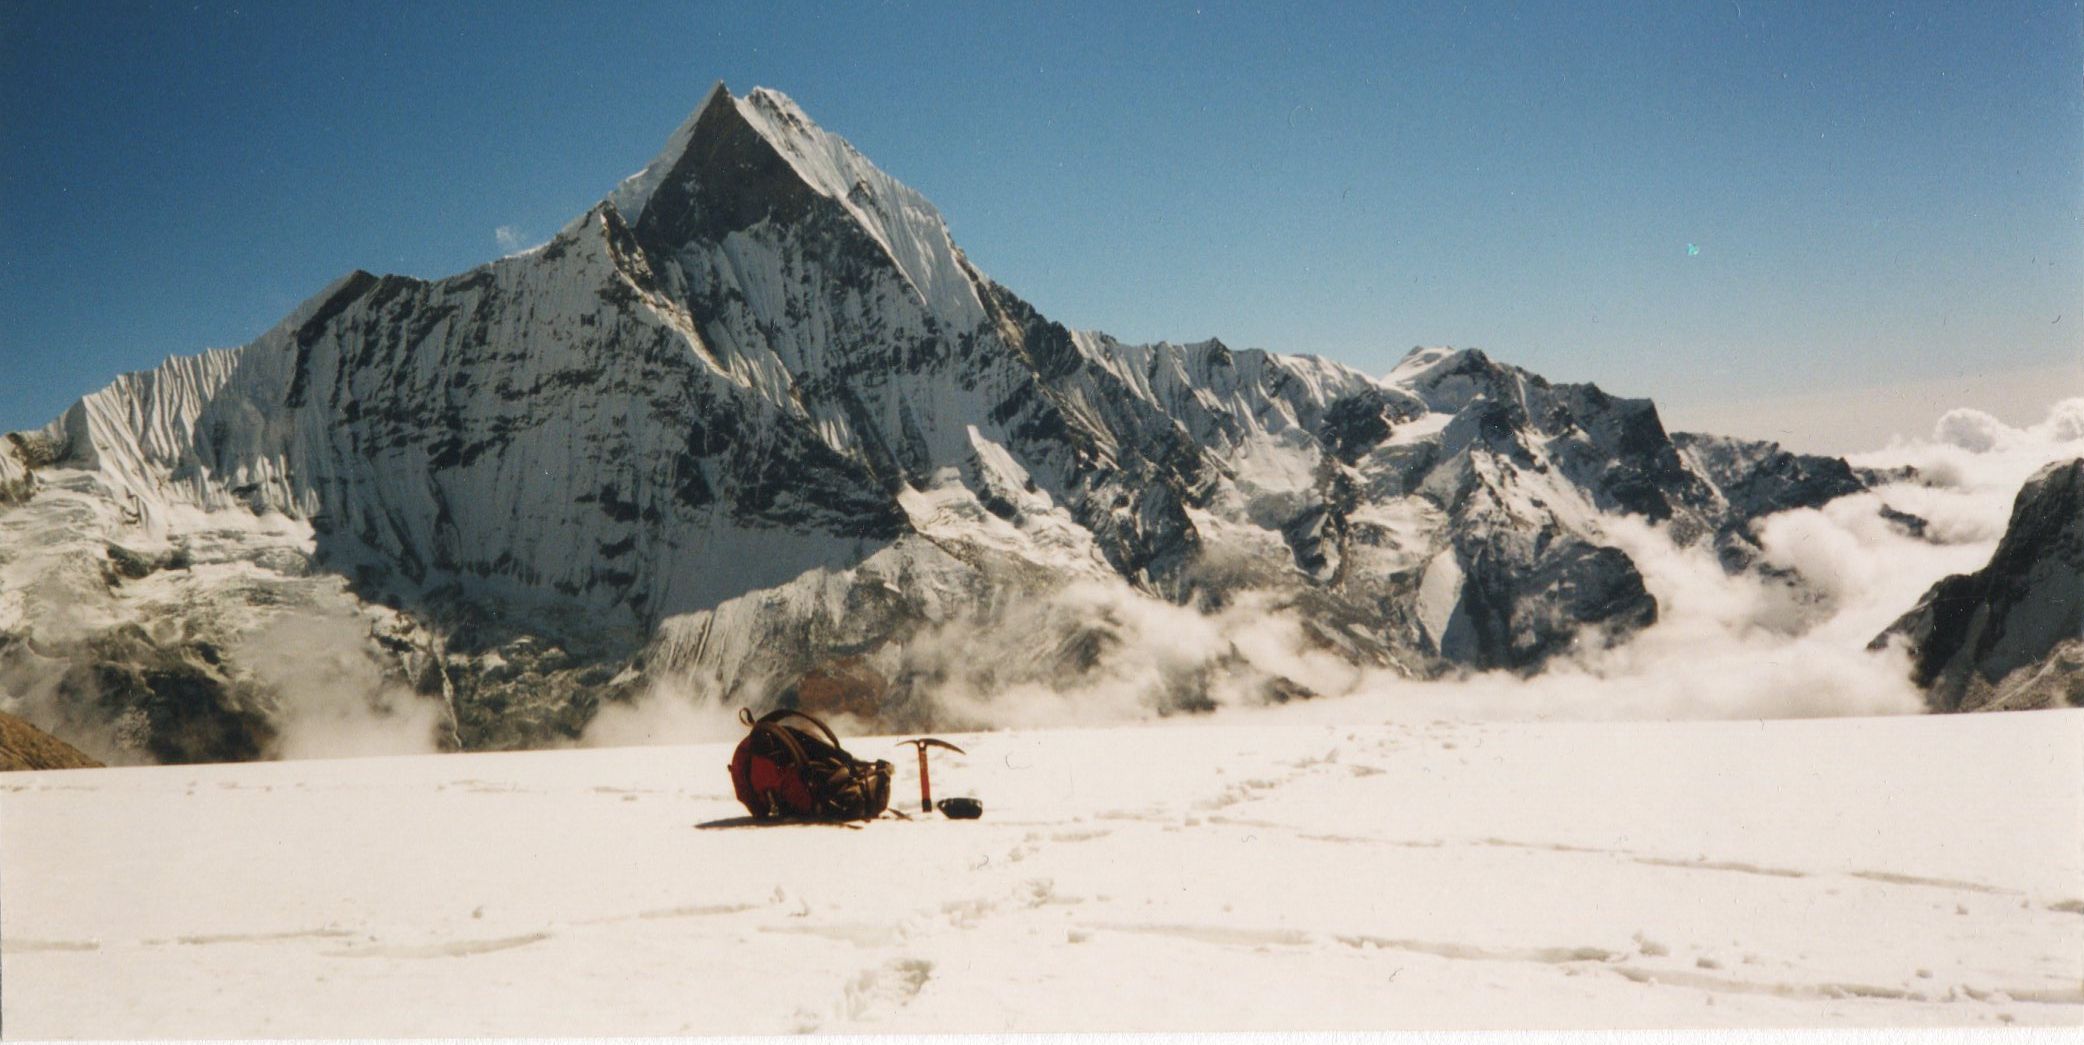 Macchapucchre, the Fishtail Mountain above Annapurna Sanctuary